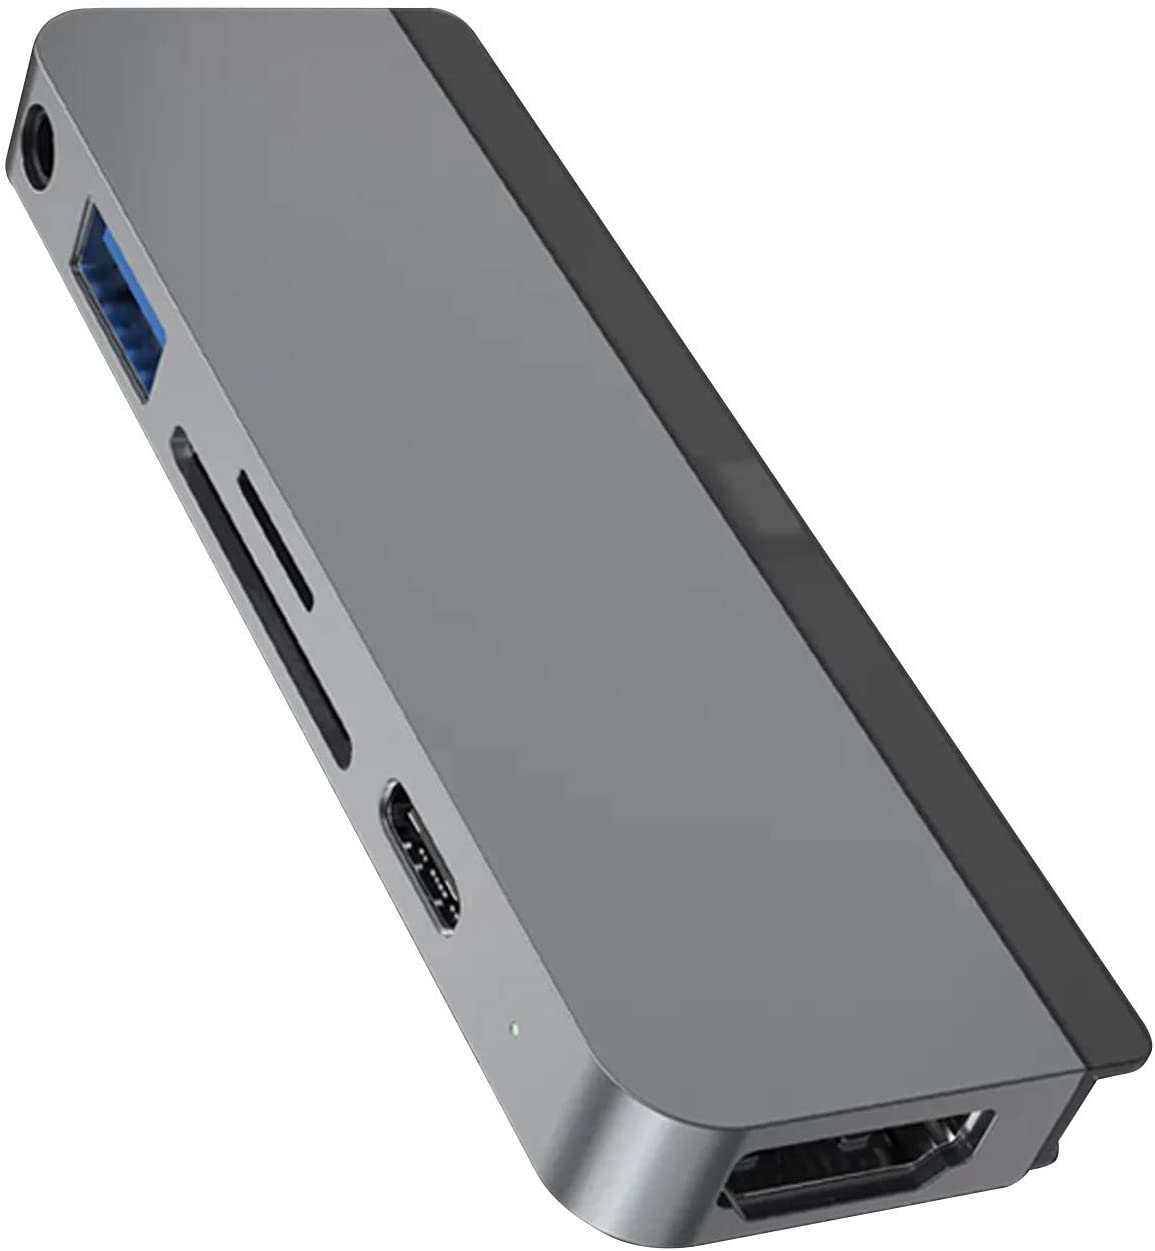 HyperDrive iPad Pro専用 6in1 USB-C Hub グレー 正規品 HP16177 iPad Pro対応 拡張 6ポート 4K 持ち運びに便利 PD機能 HDMI変換アダプター USB 3.1ポート USB-Cポート usbcハブ 急速充電 60W Micro SD/SDカード HYPER++